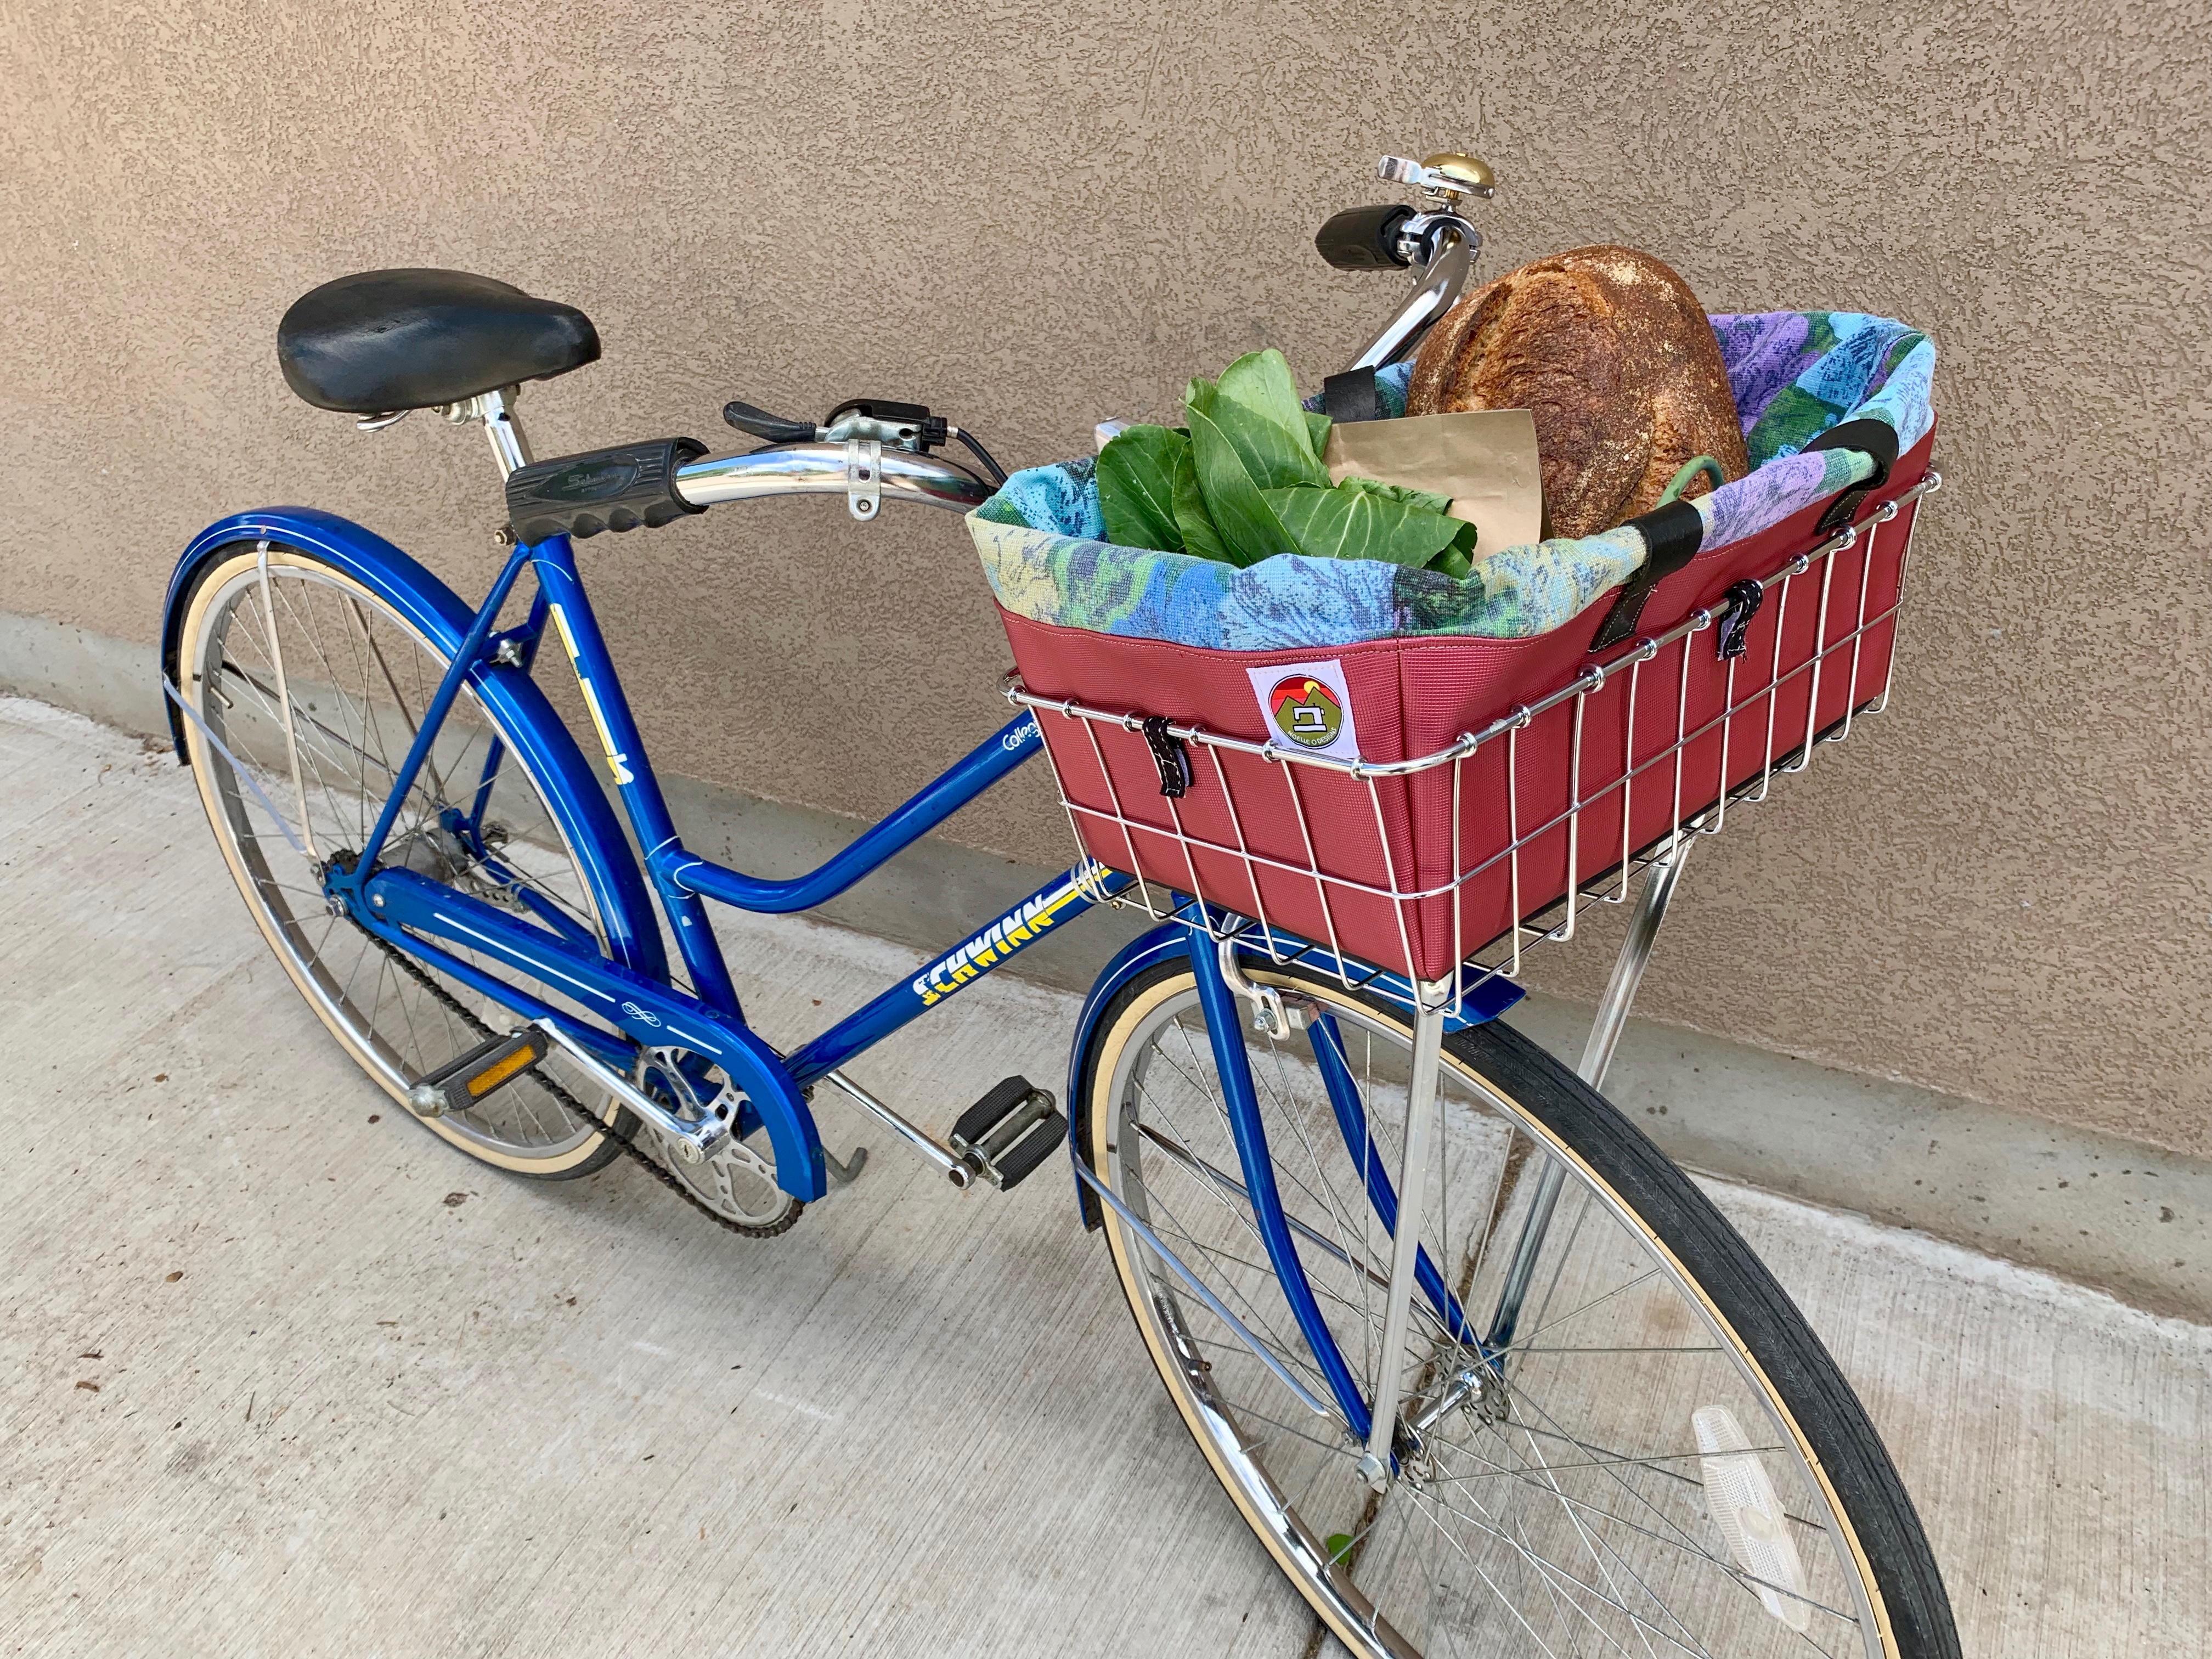 bike basket bag